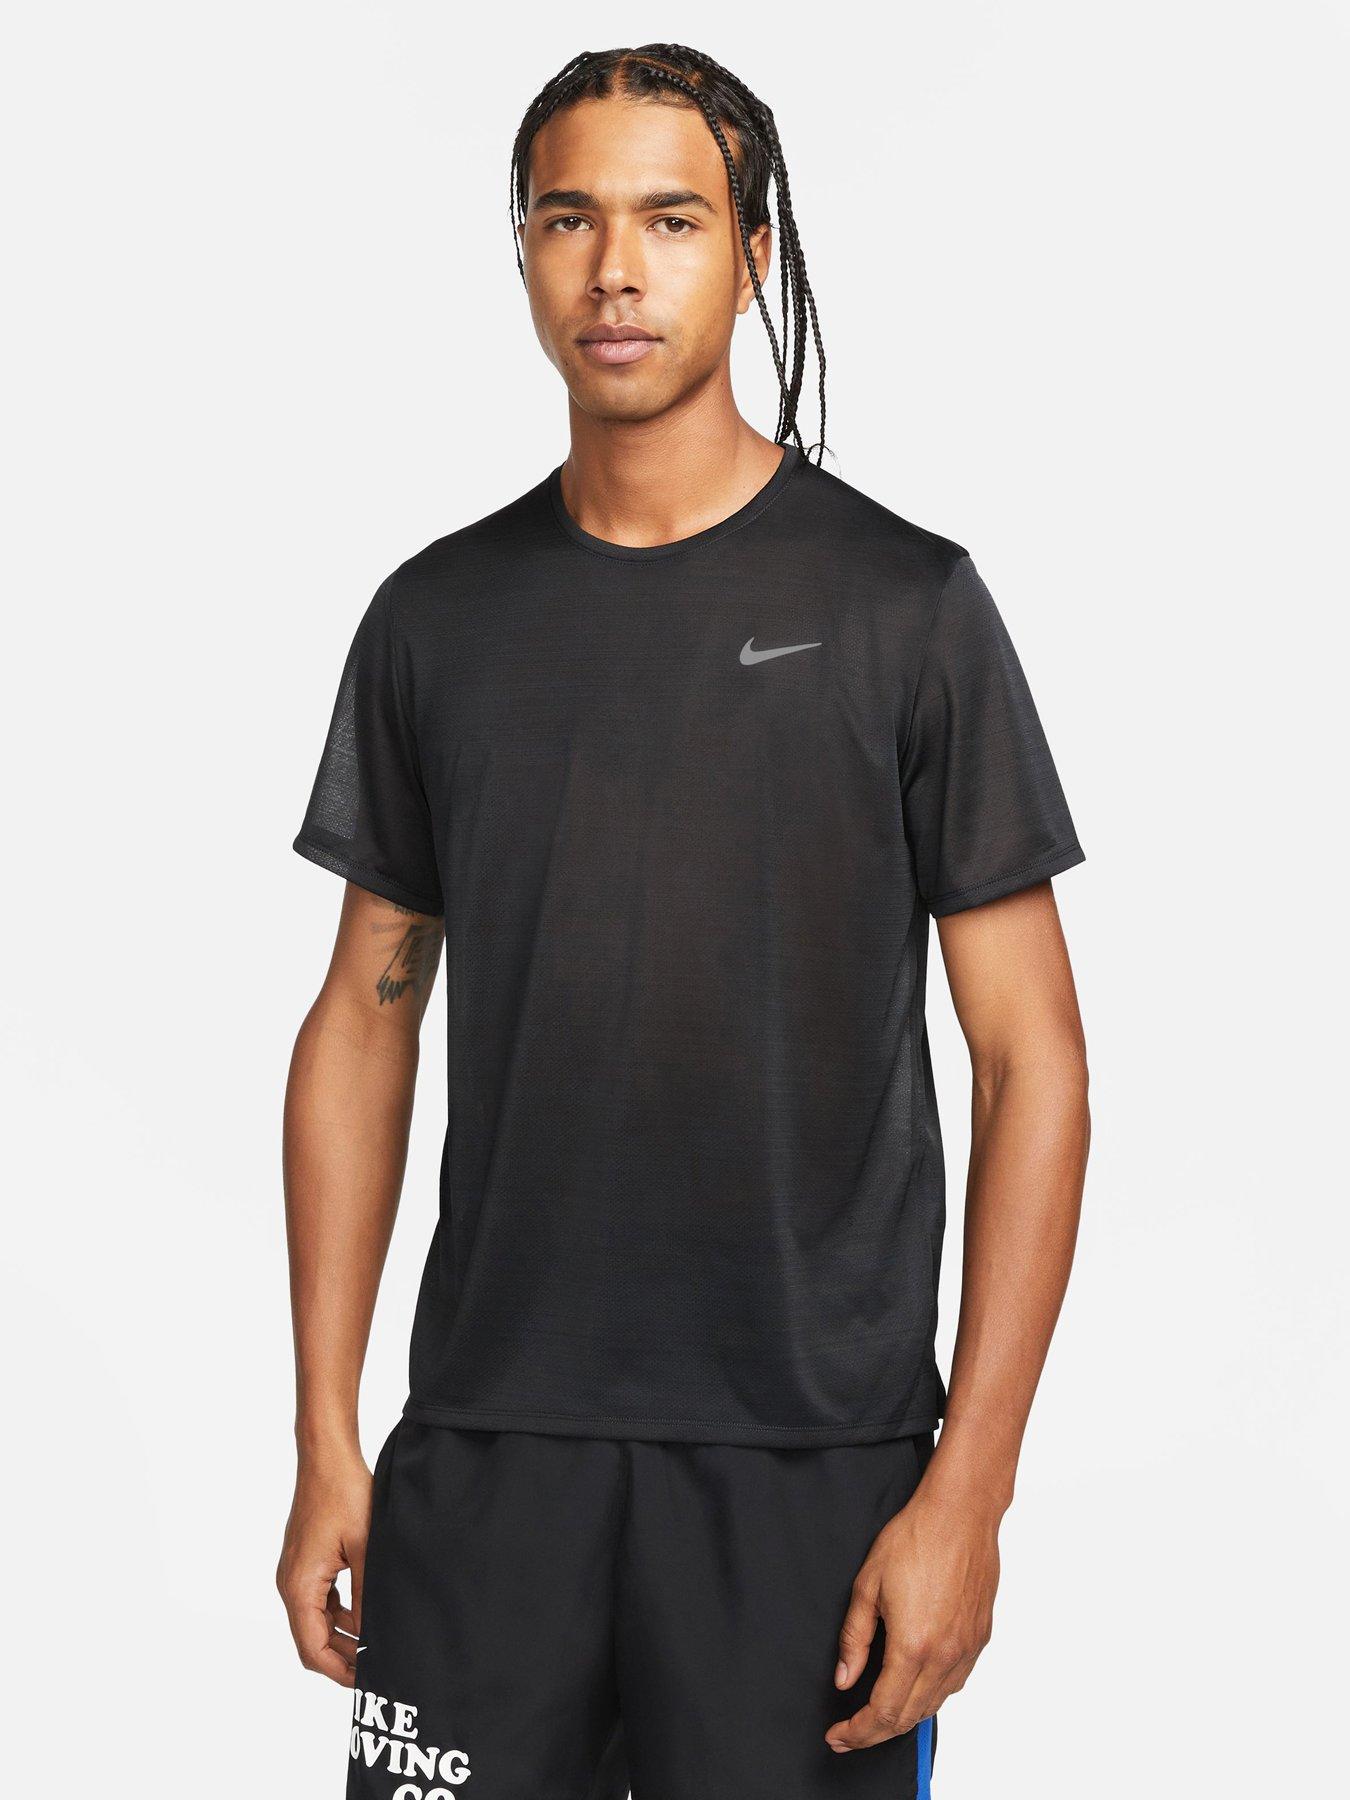 Nike Dri-fit Running Miler Breathe T-shirt - Black | very.co.uk